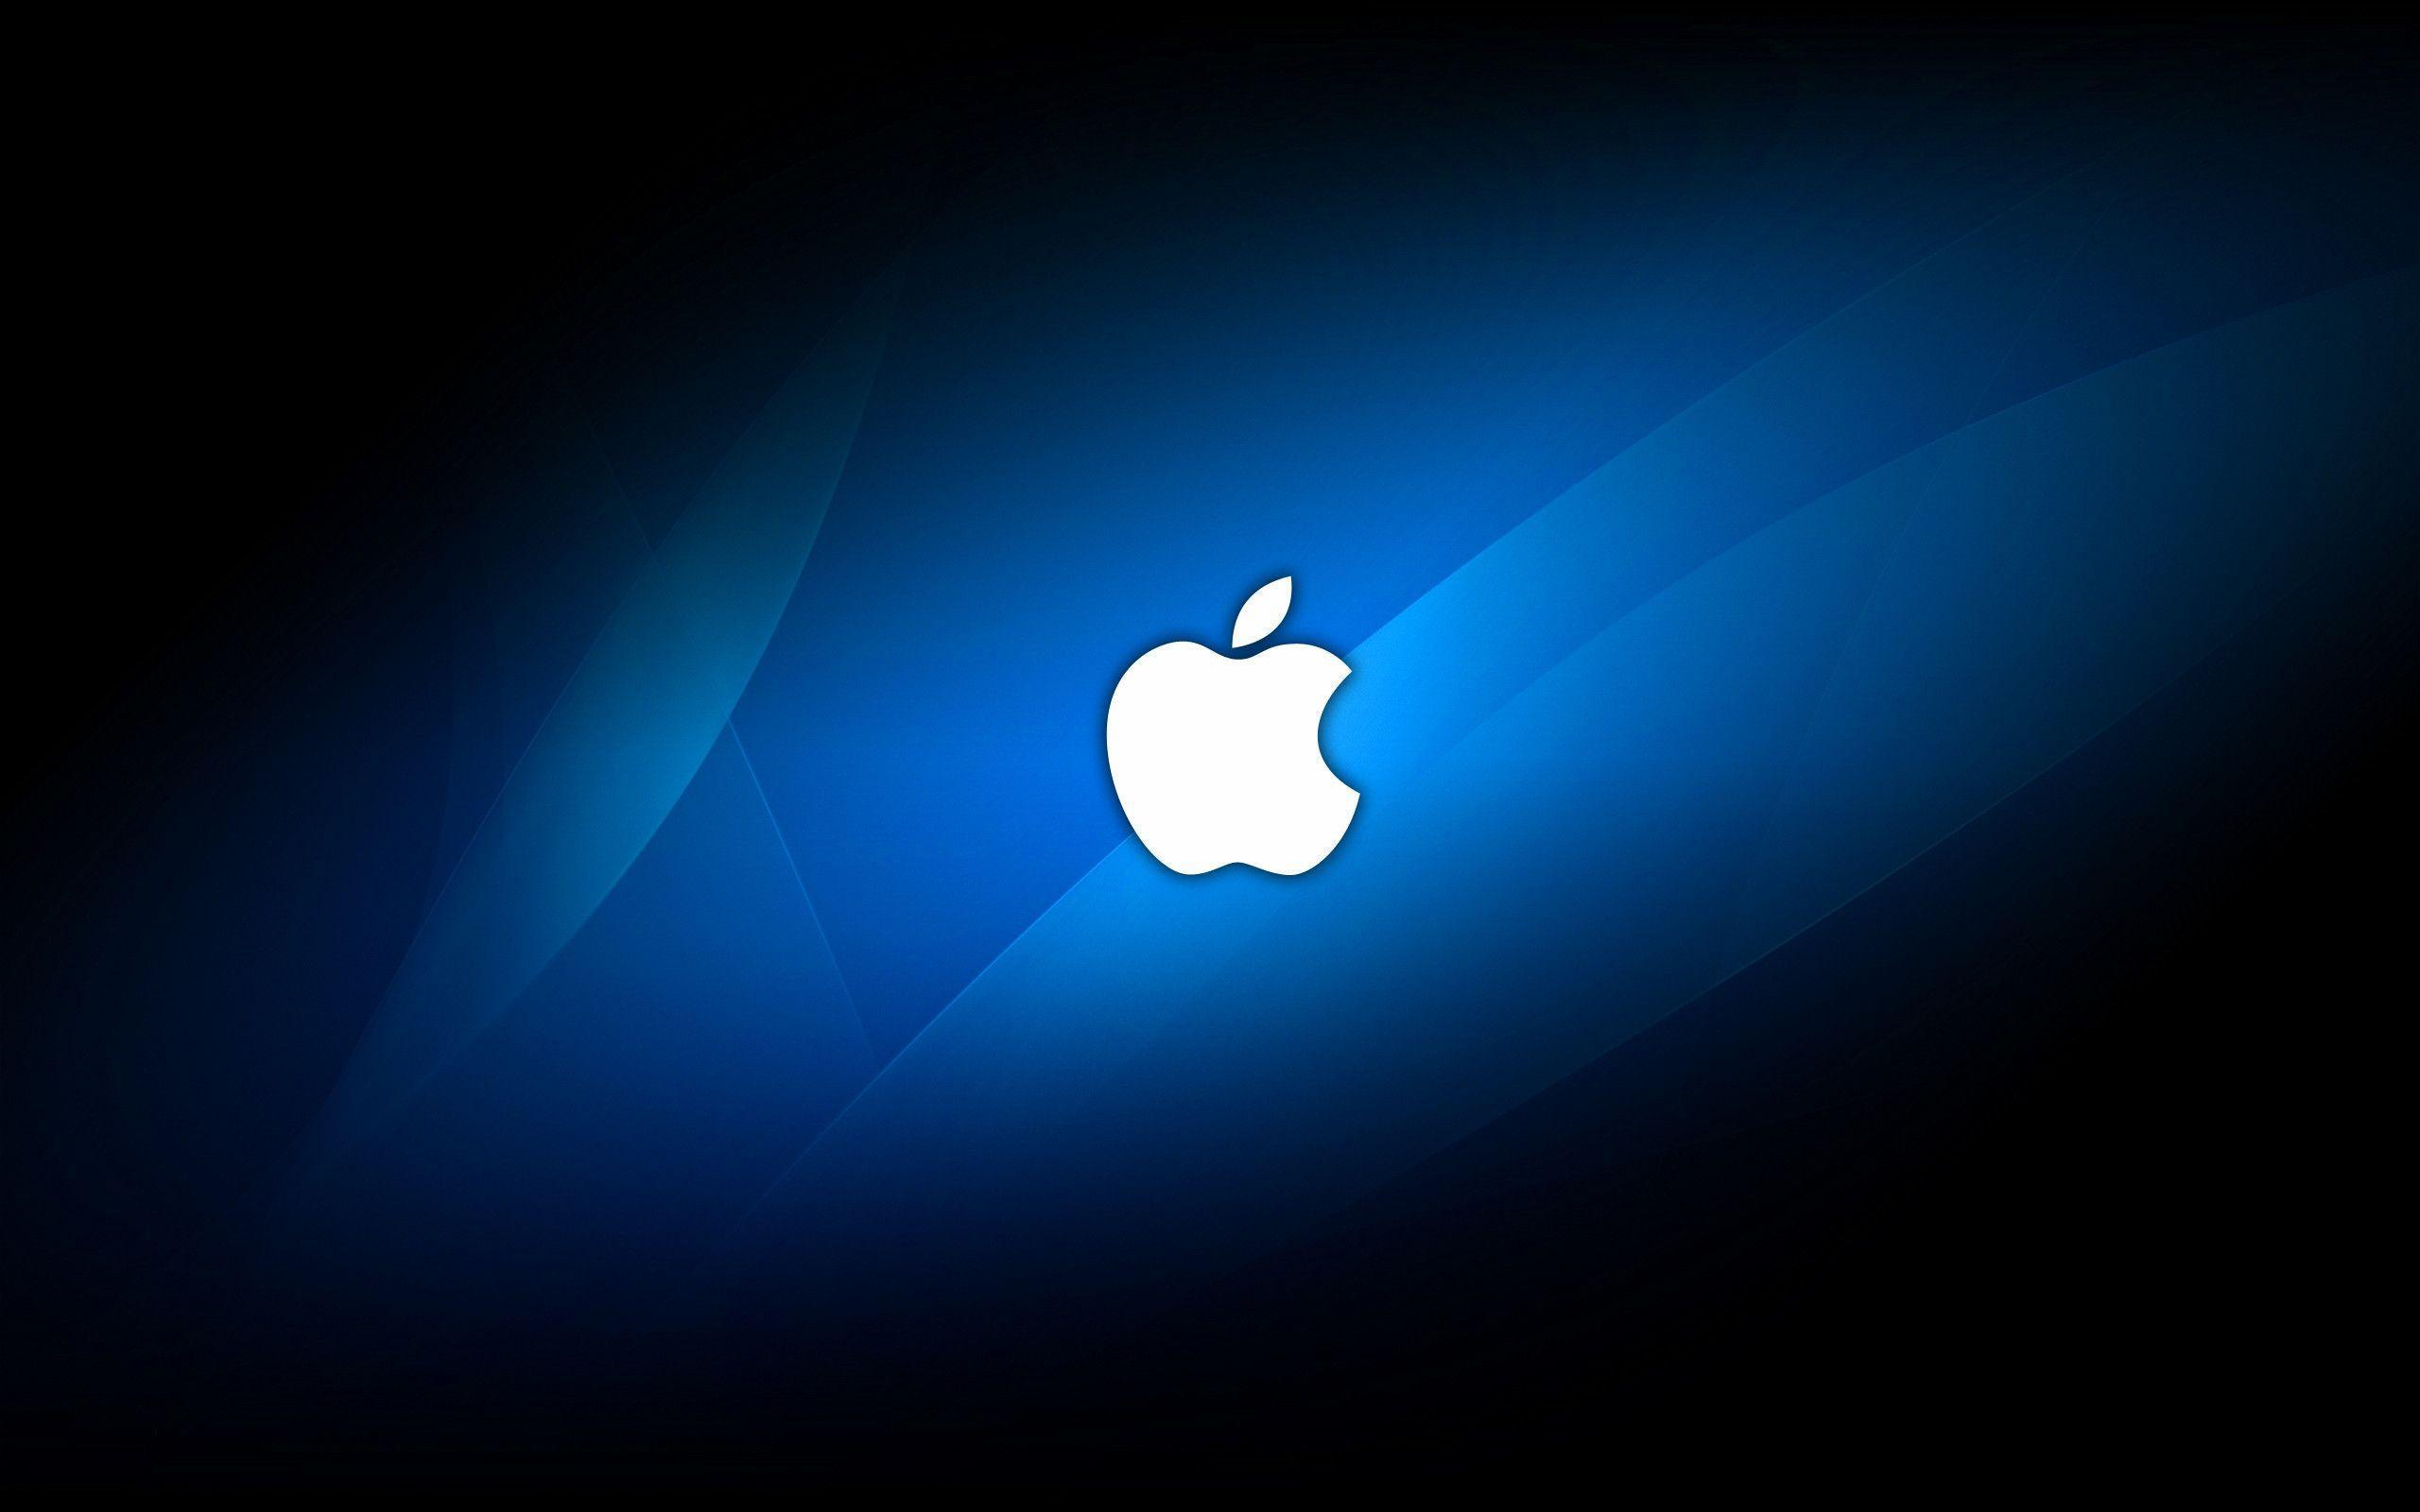 Apple Logo Wallpapers Hd: Apple Logo Wallpapers